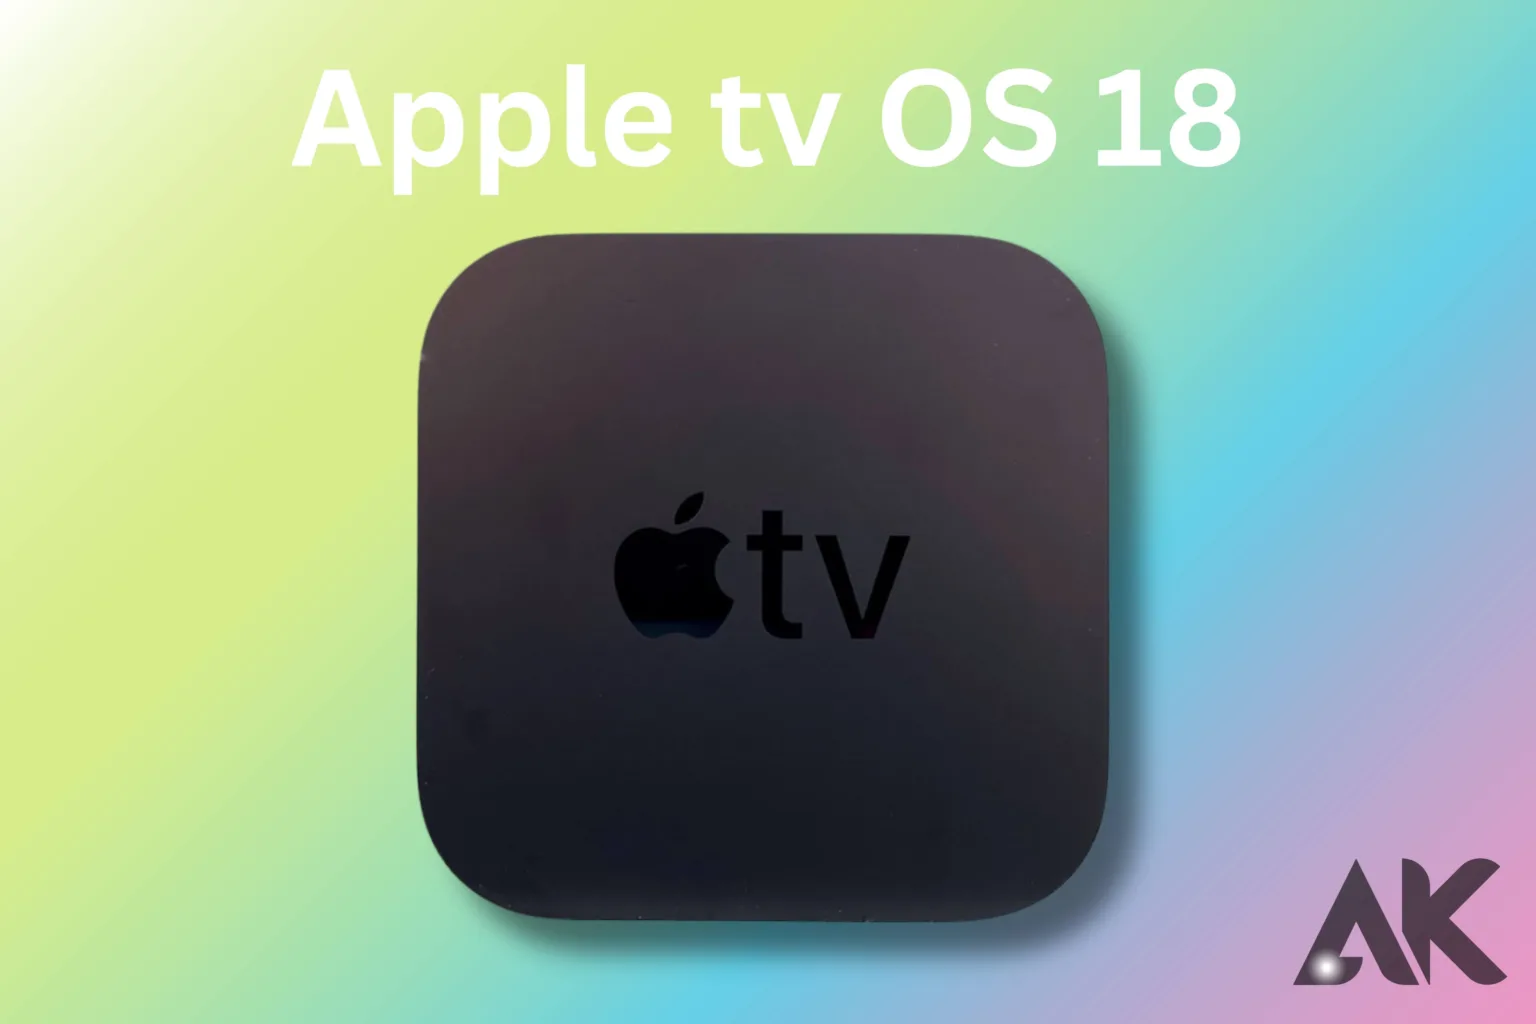 Apple tvOS 18 Features